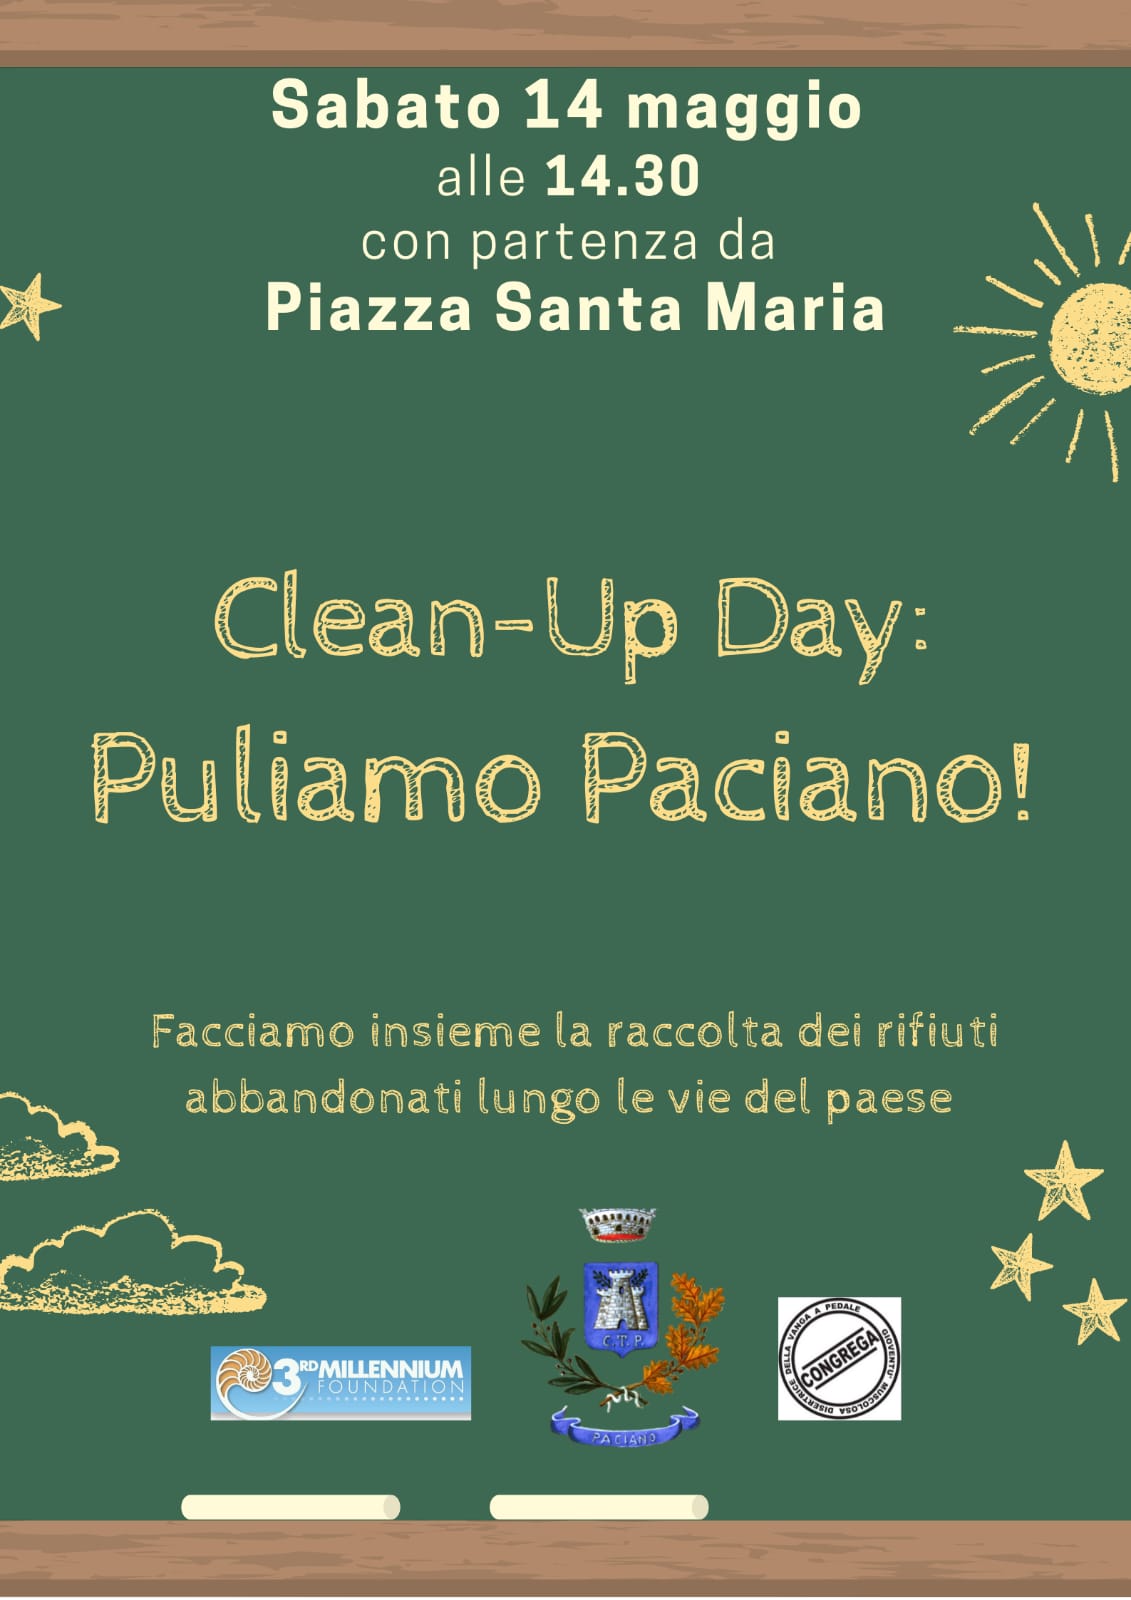 Paciano – Rifiuti, torna il “Clean up Day”